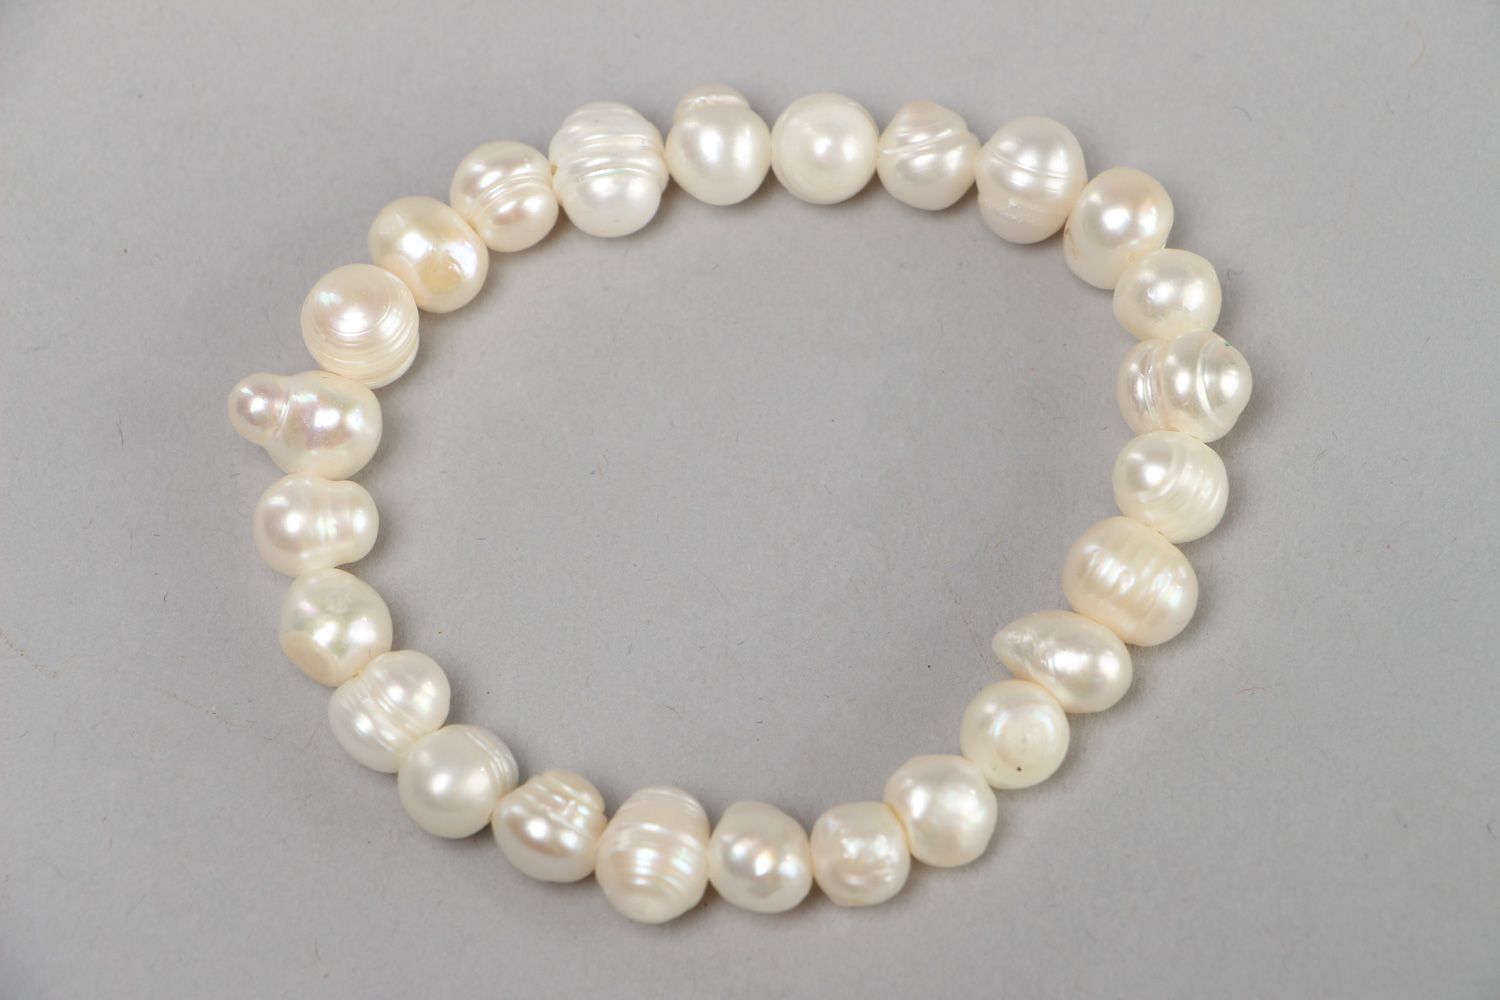 Stylish handmade stretch wrist bracelet with white fresh water pearls for women photo 1